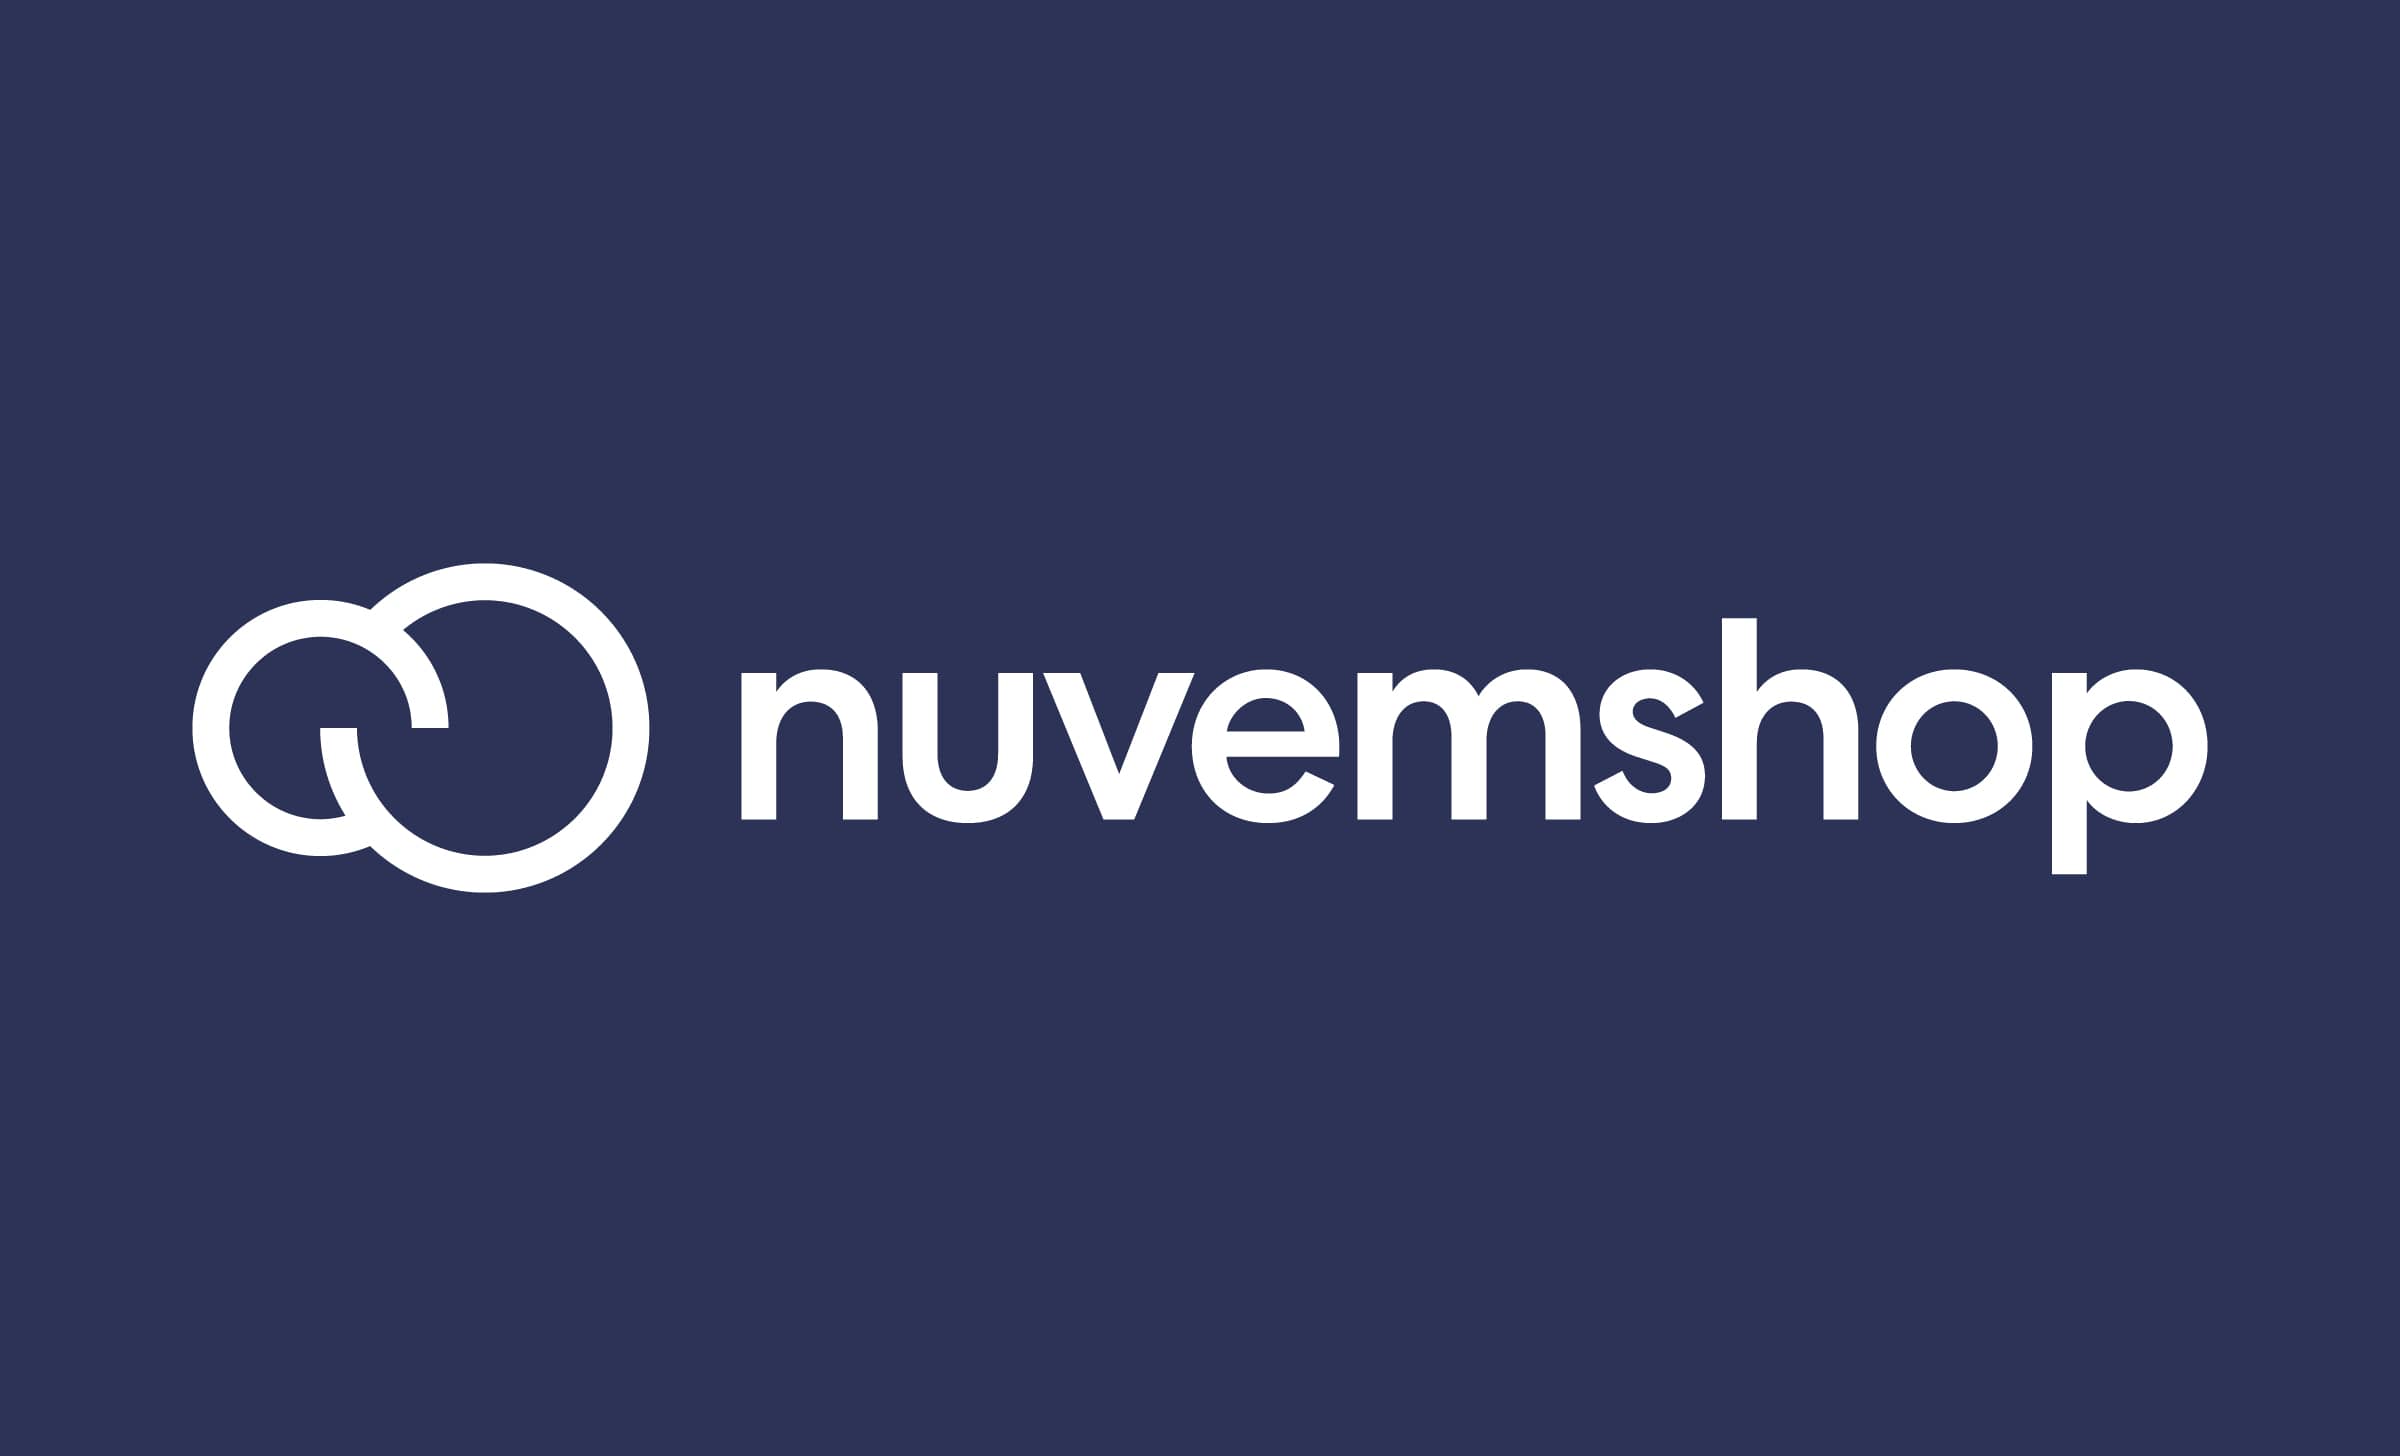  Plataforma de varejo online Nuvemshop recebe aporte de R$ 500 mi